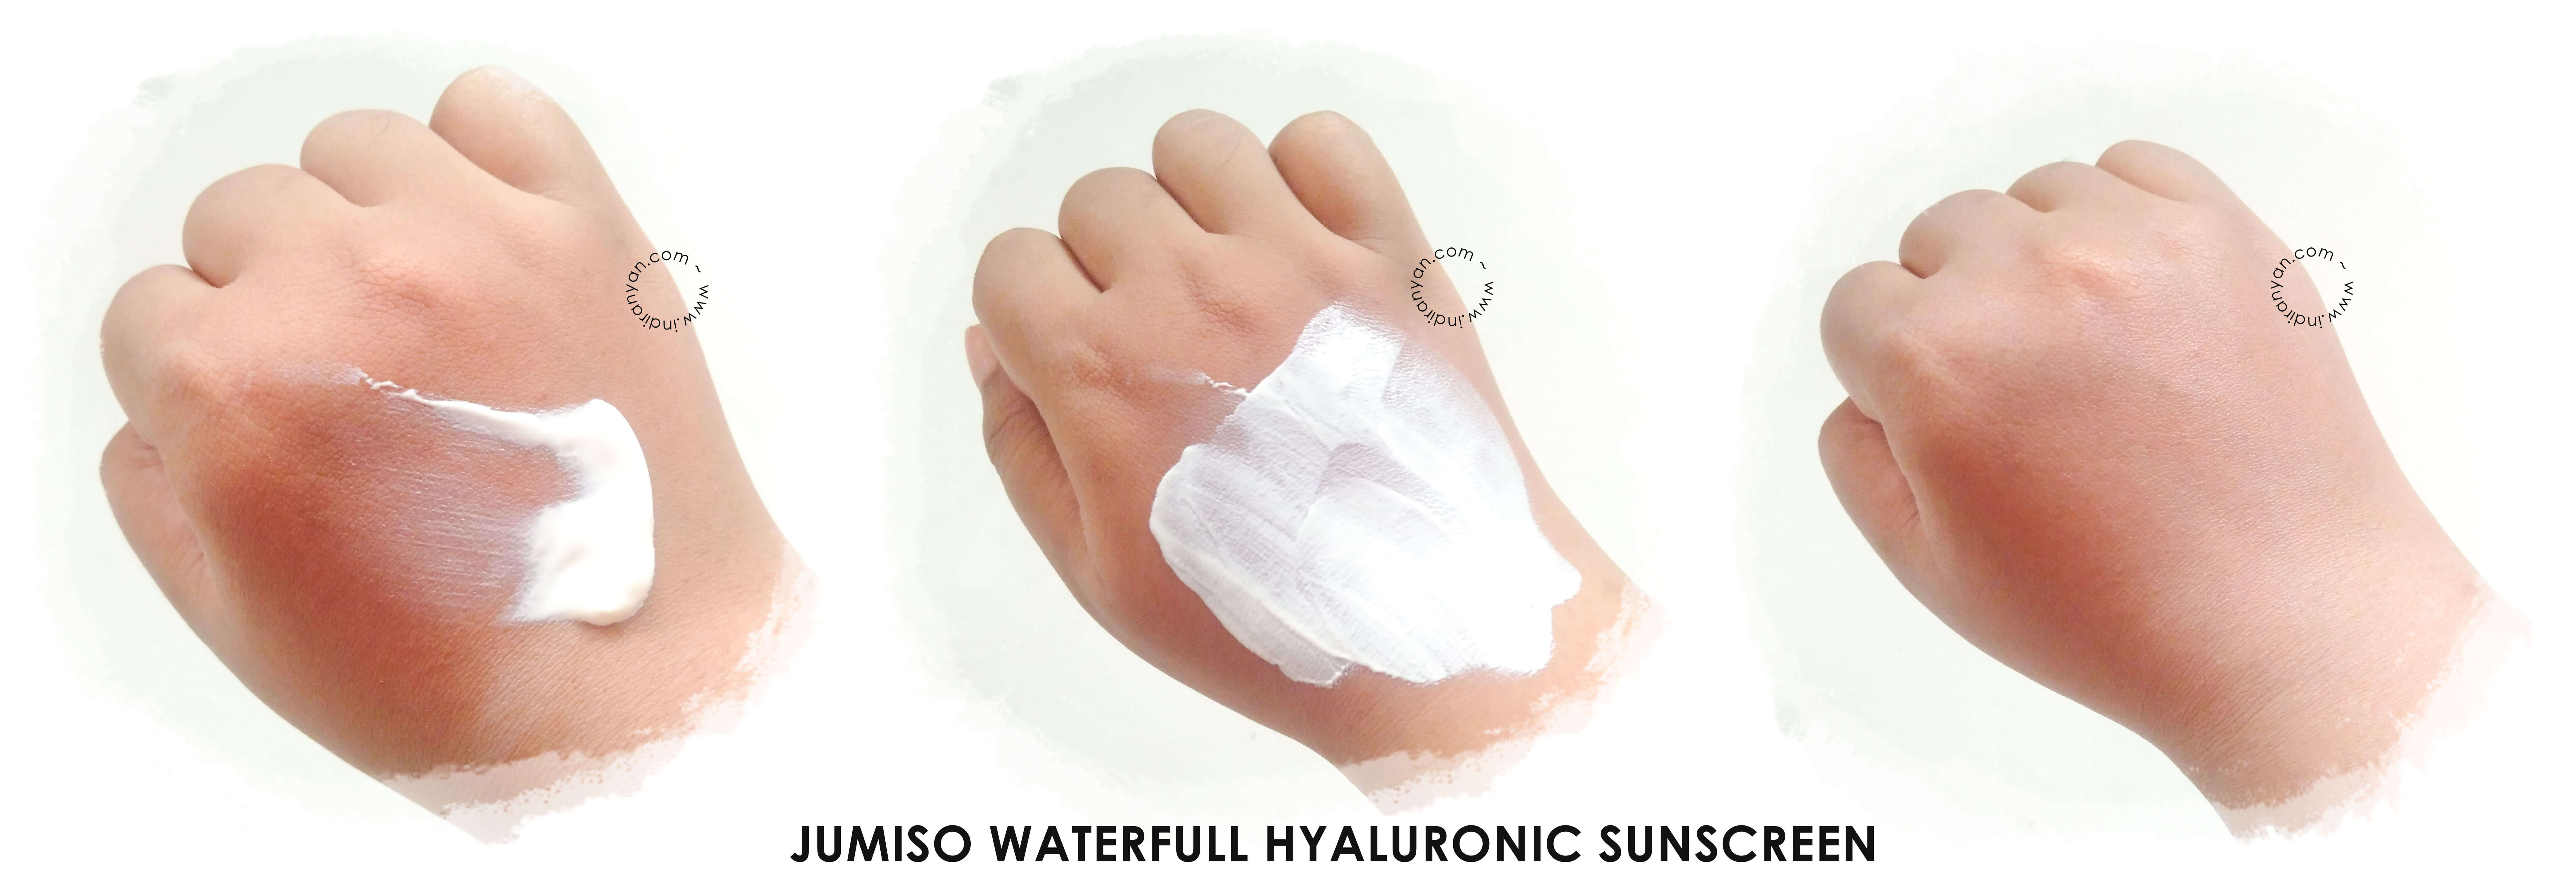 jumiso-waterfull-hyaluronic-sunscreen